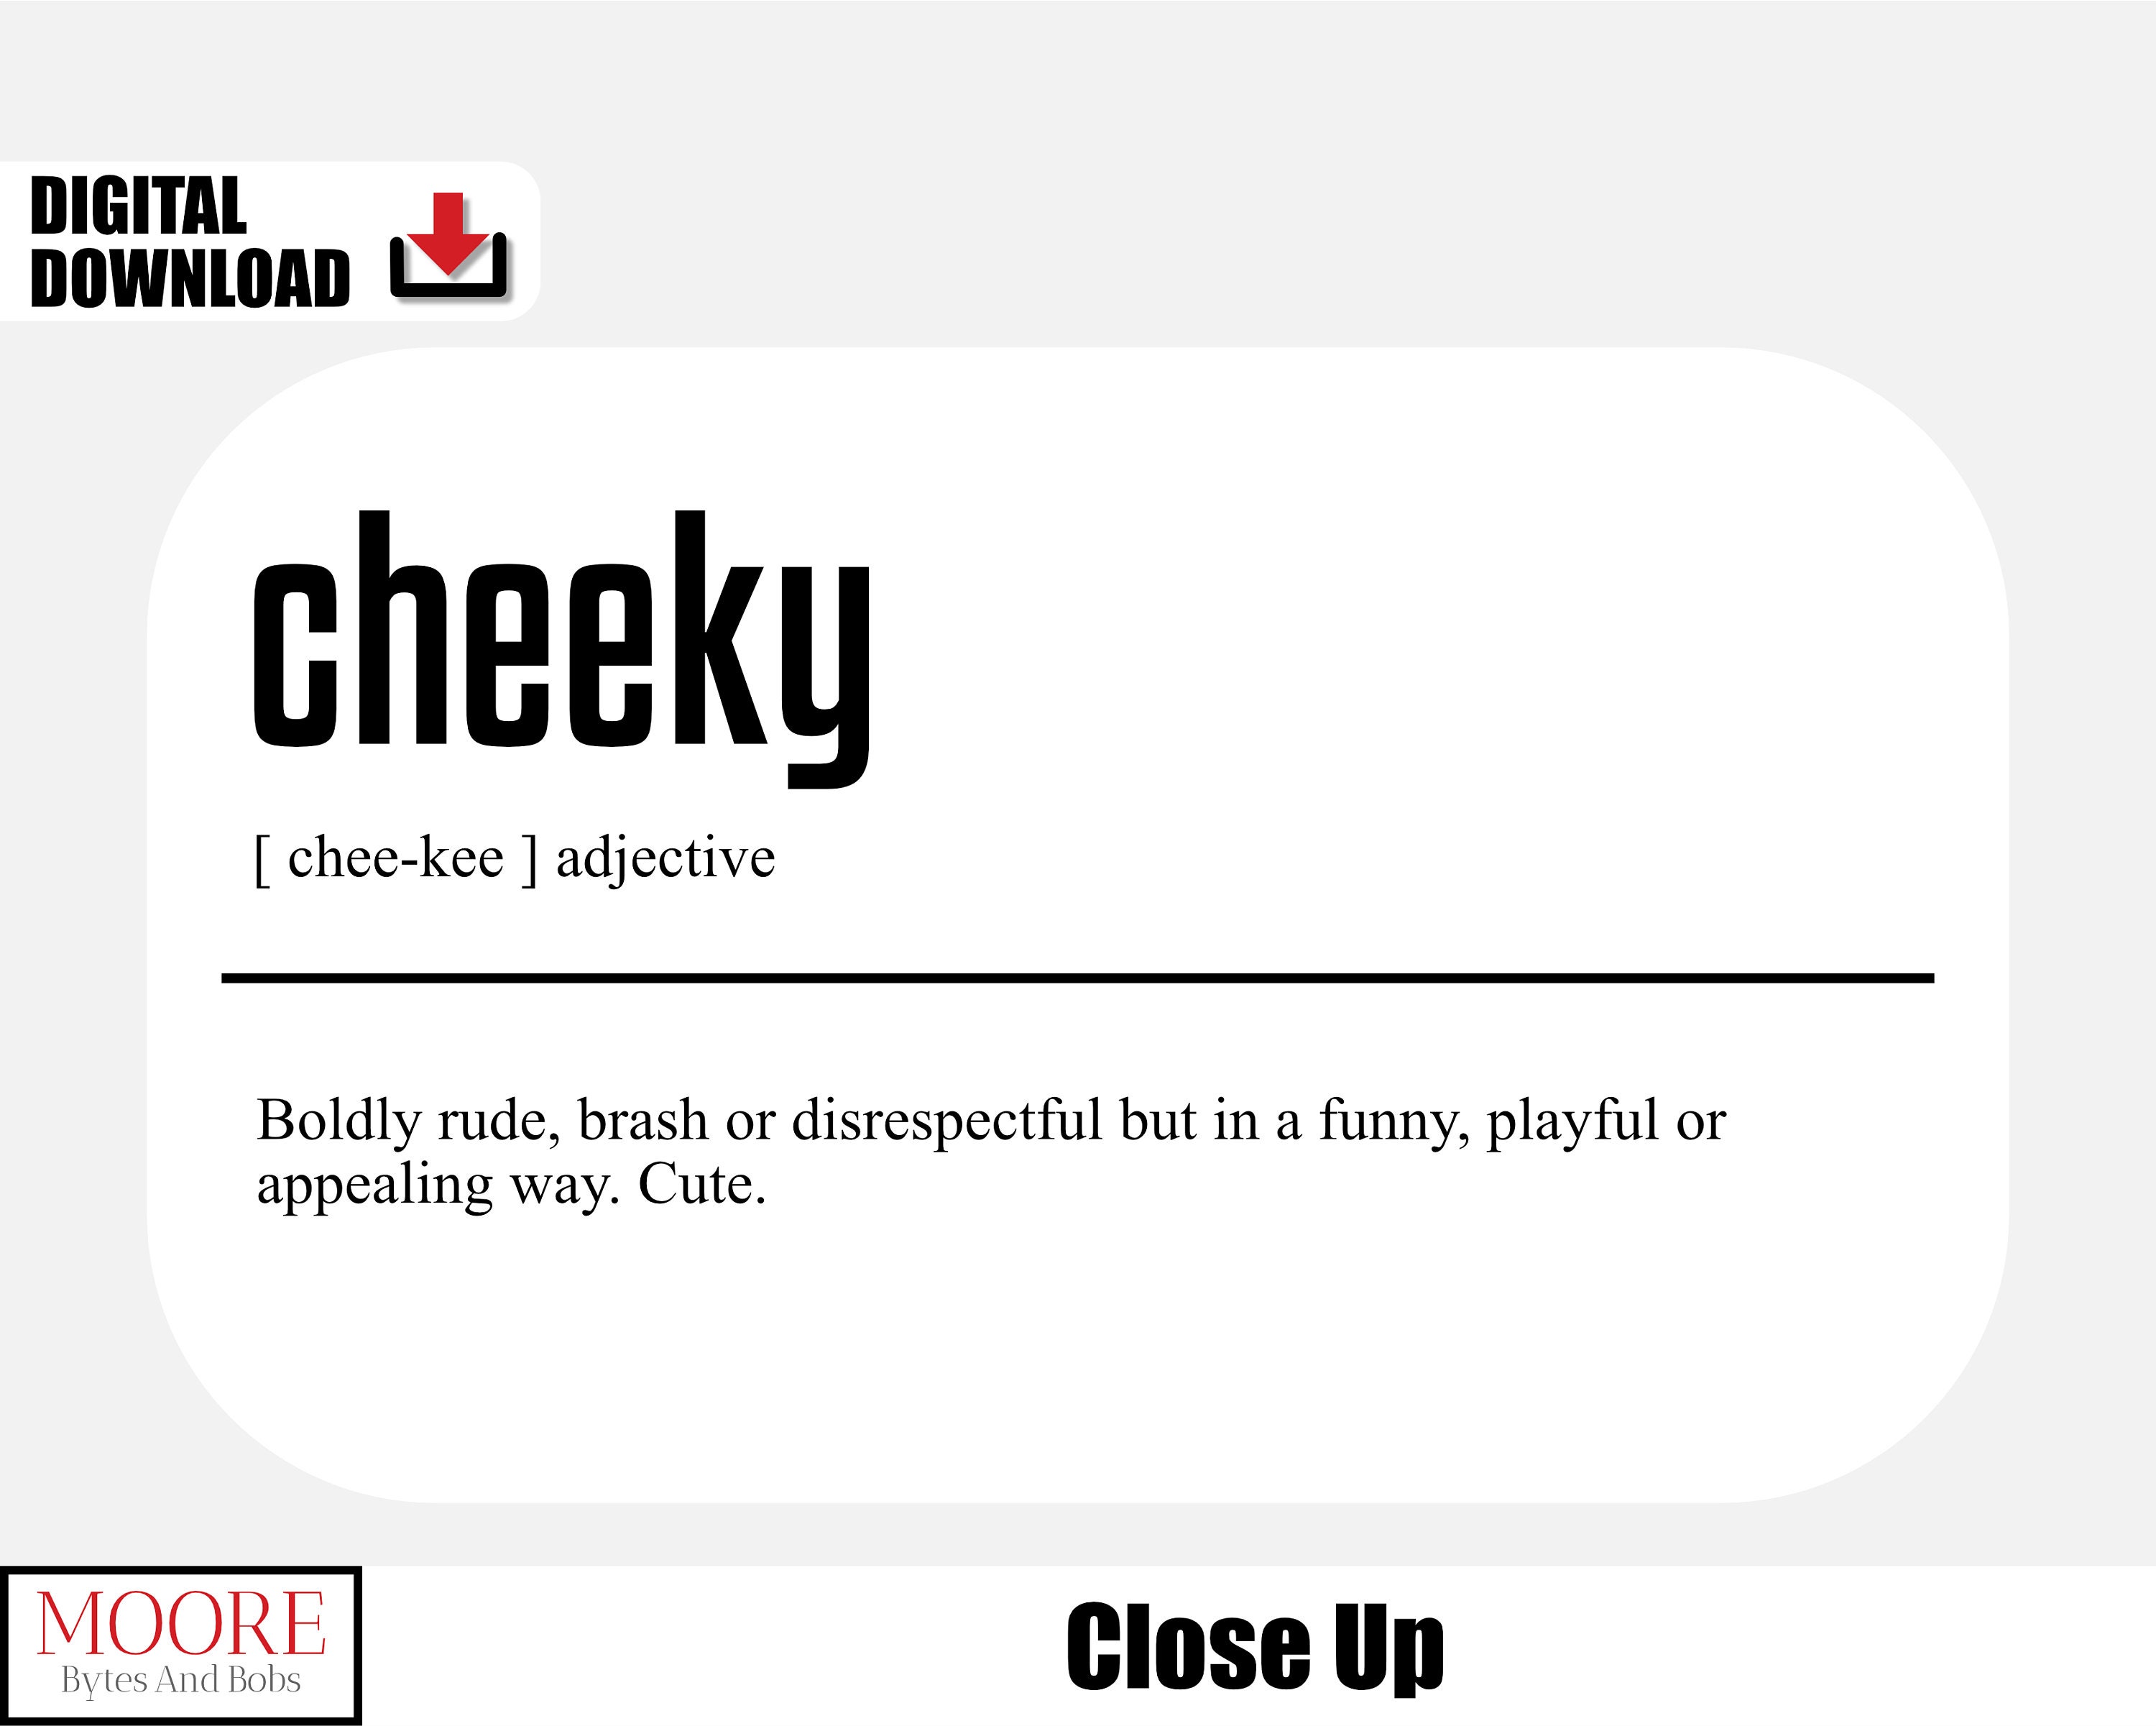 Cheeky Definition Print, British Slang Dictionary Poster